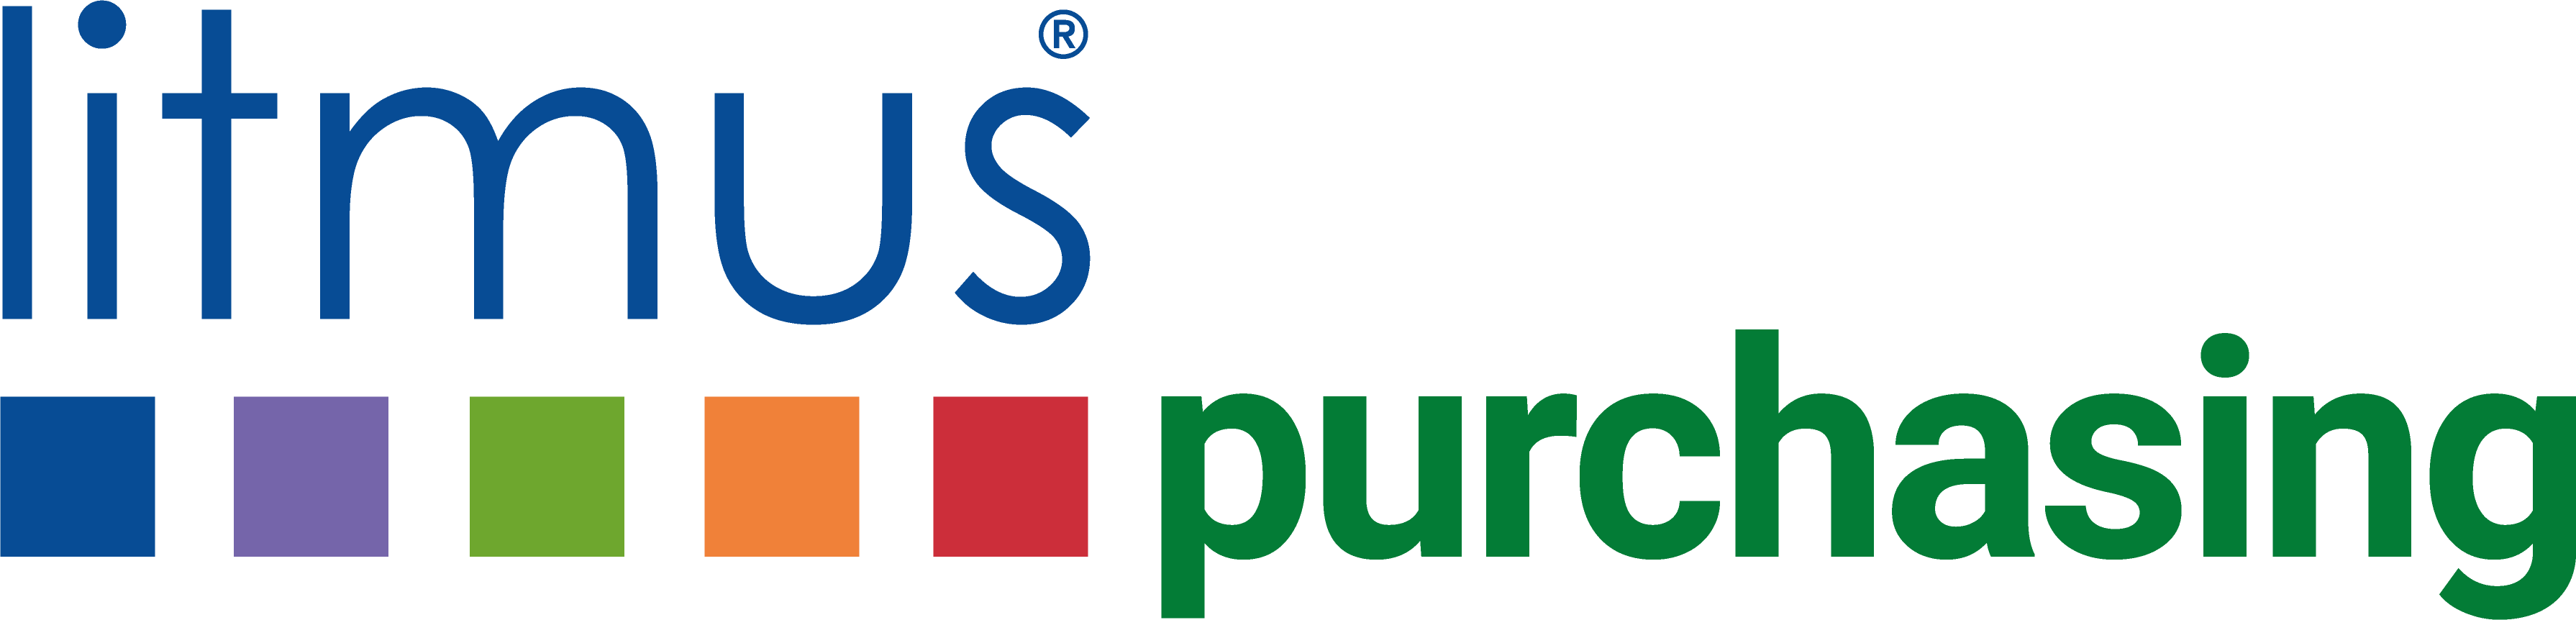 Litmus PURCHASING Logo with R